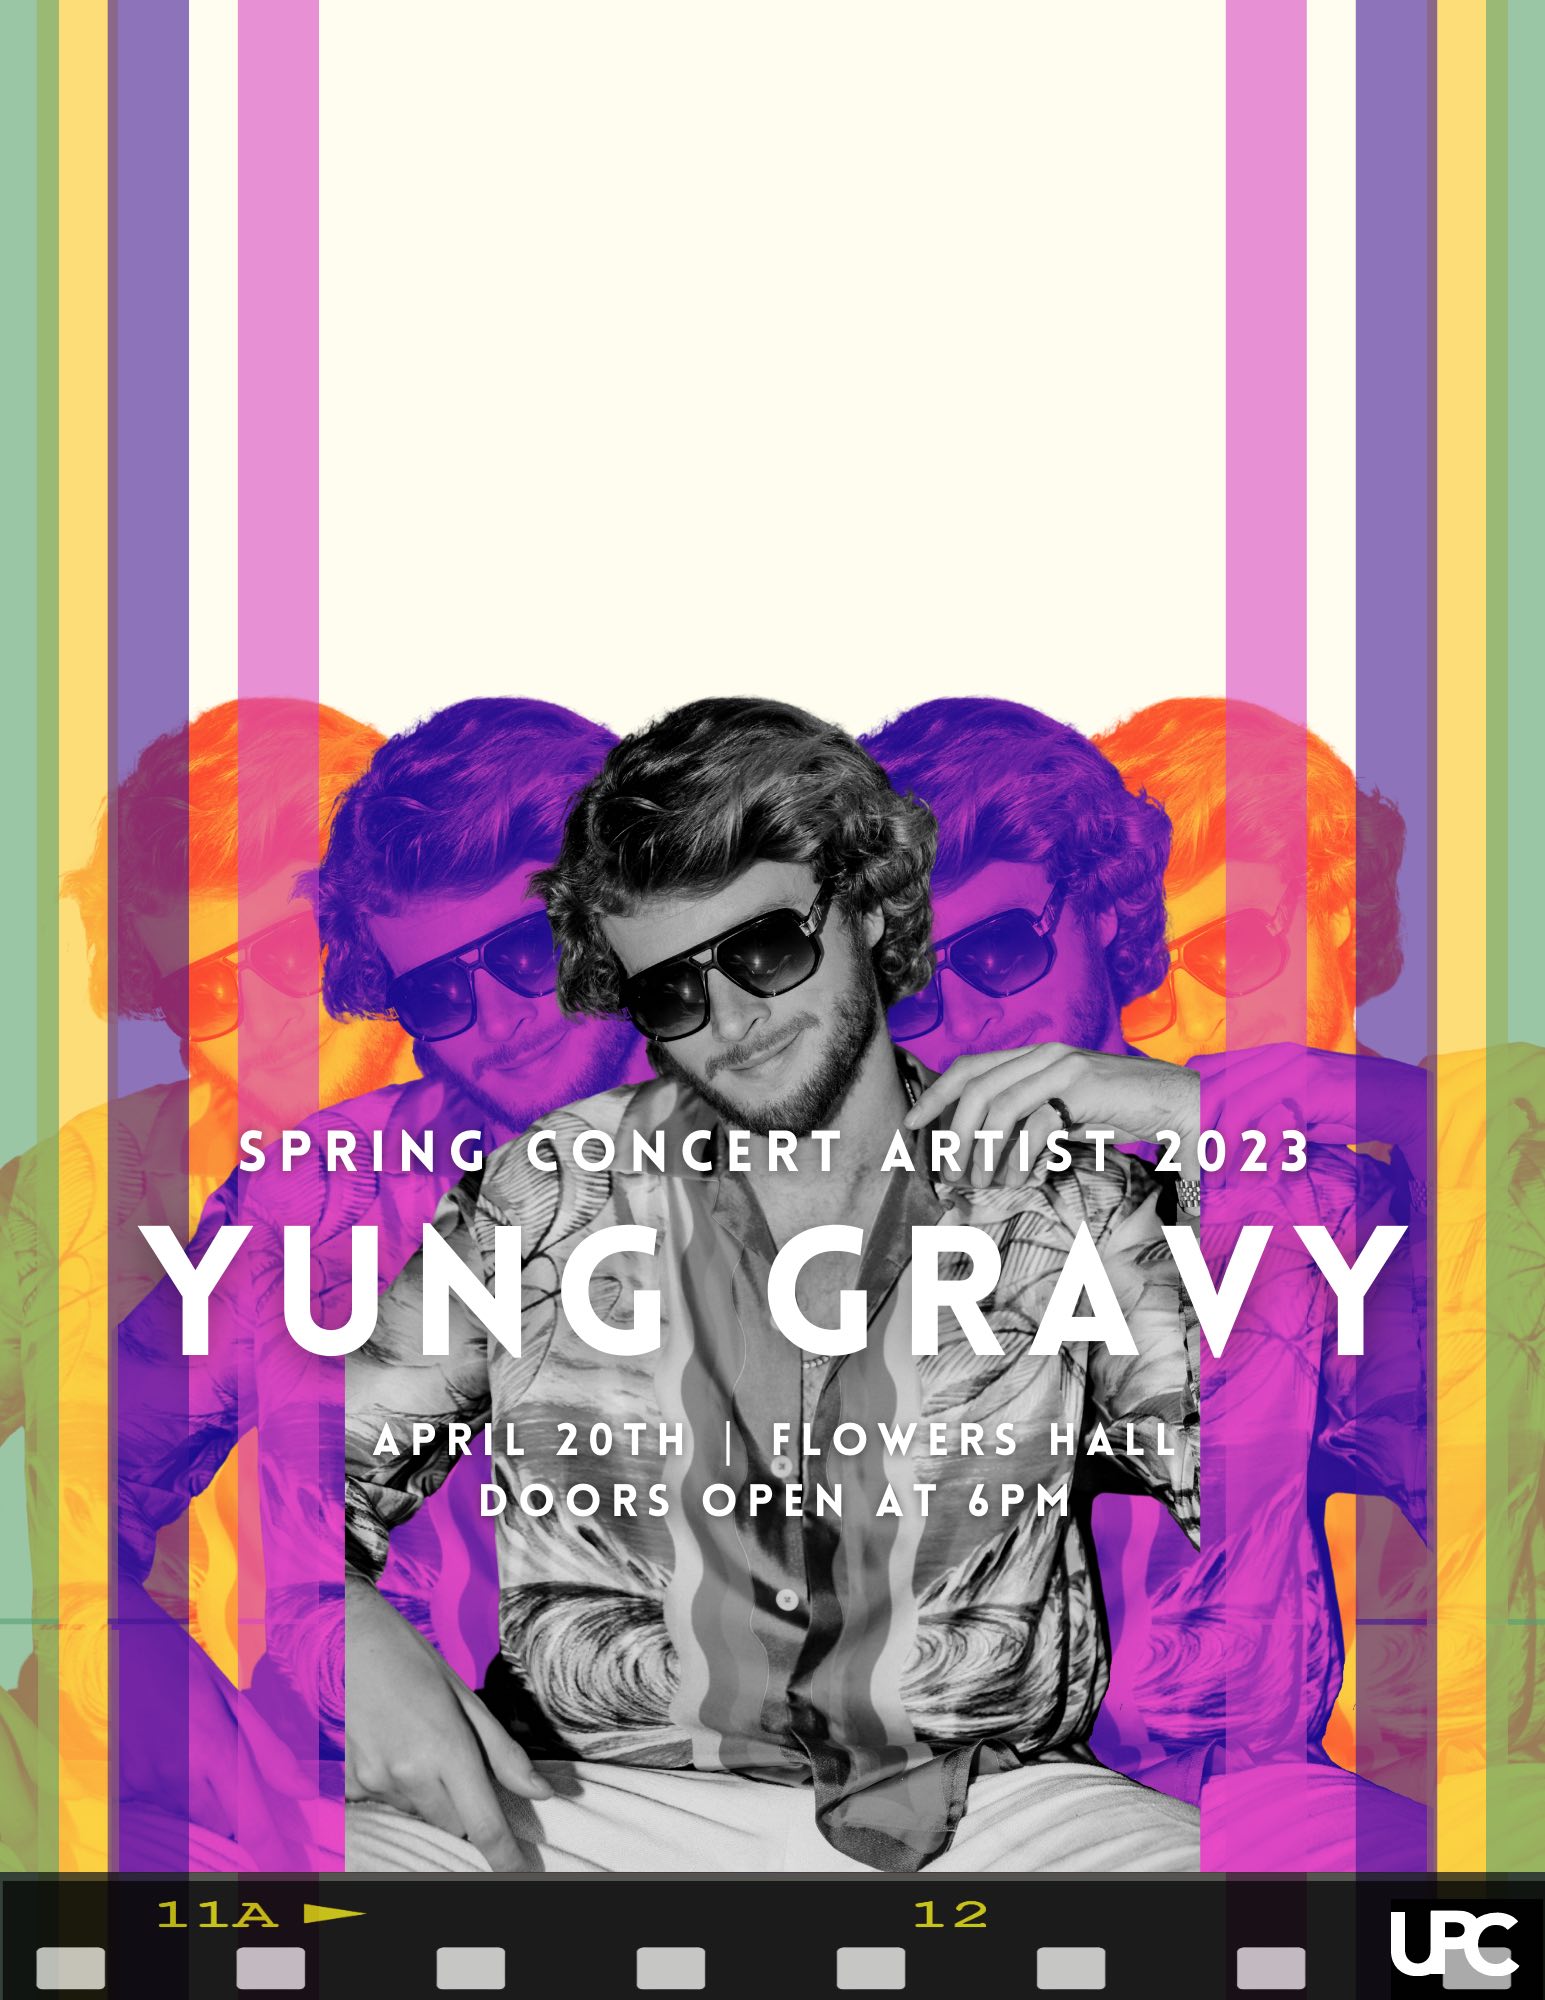 Yung Gravy will headline the 2023 University of North Alabama Spring Concert.